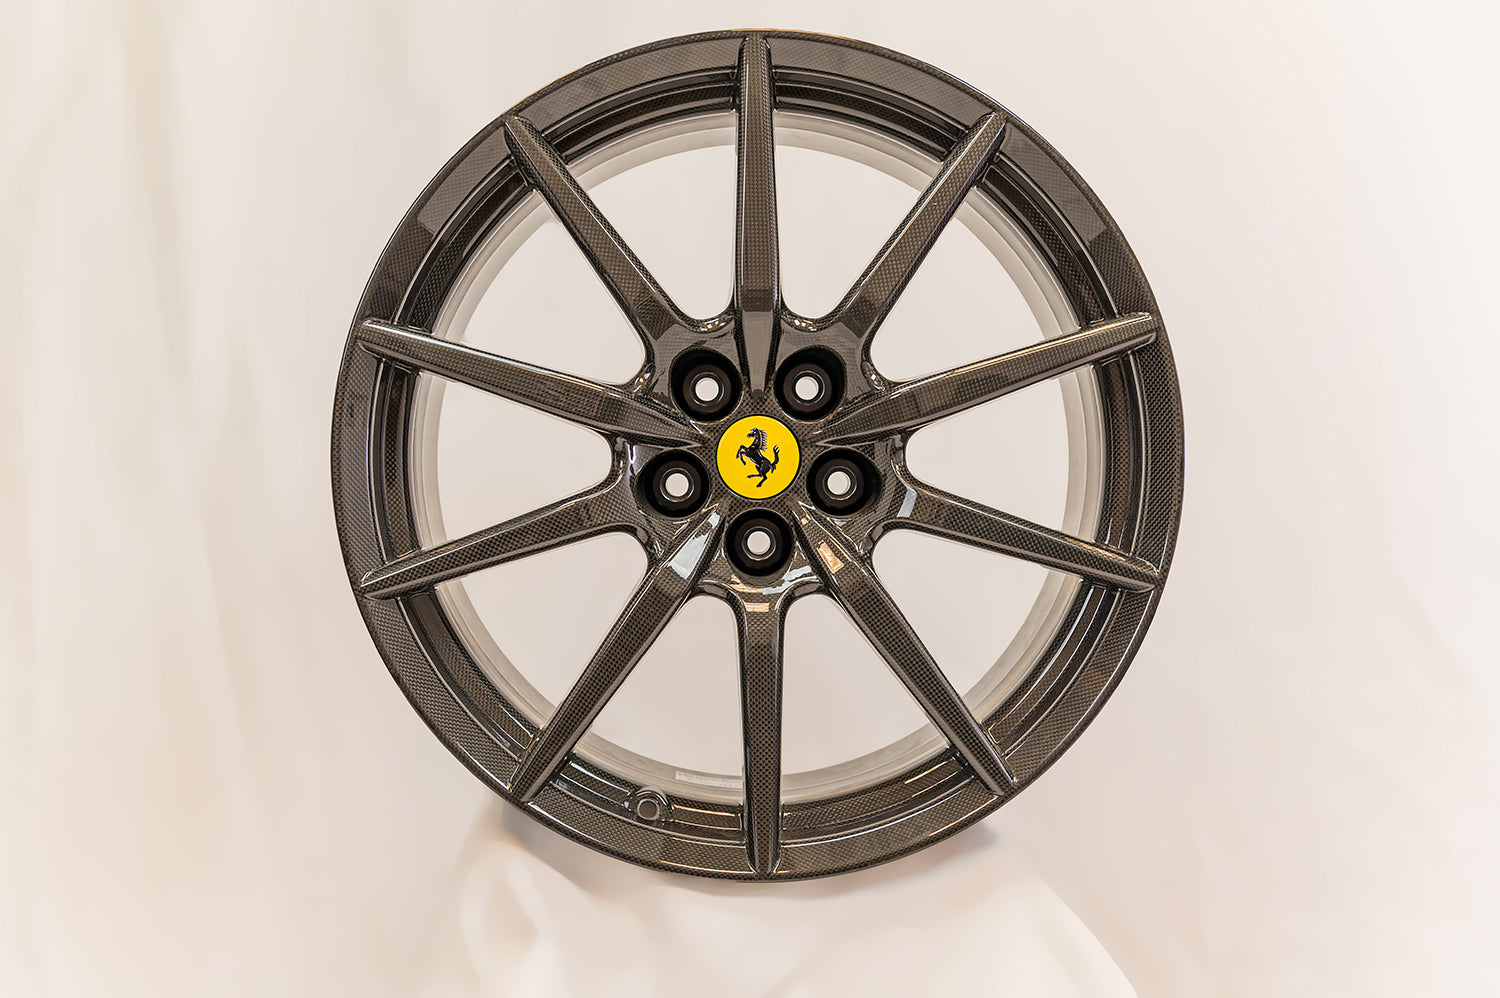 Ferrari 488 Pista 20" Carbon Fiber Wheels